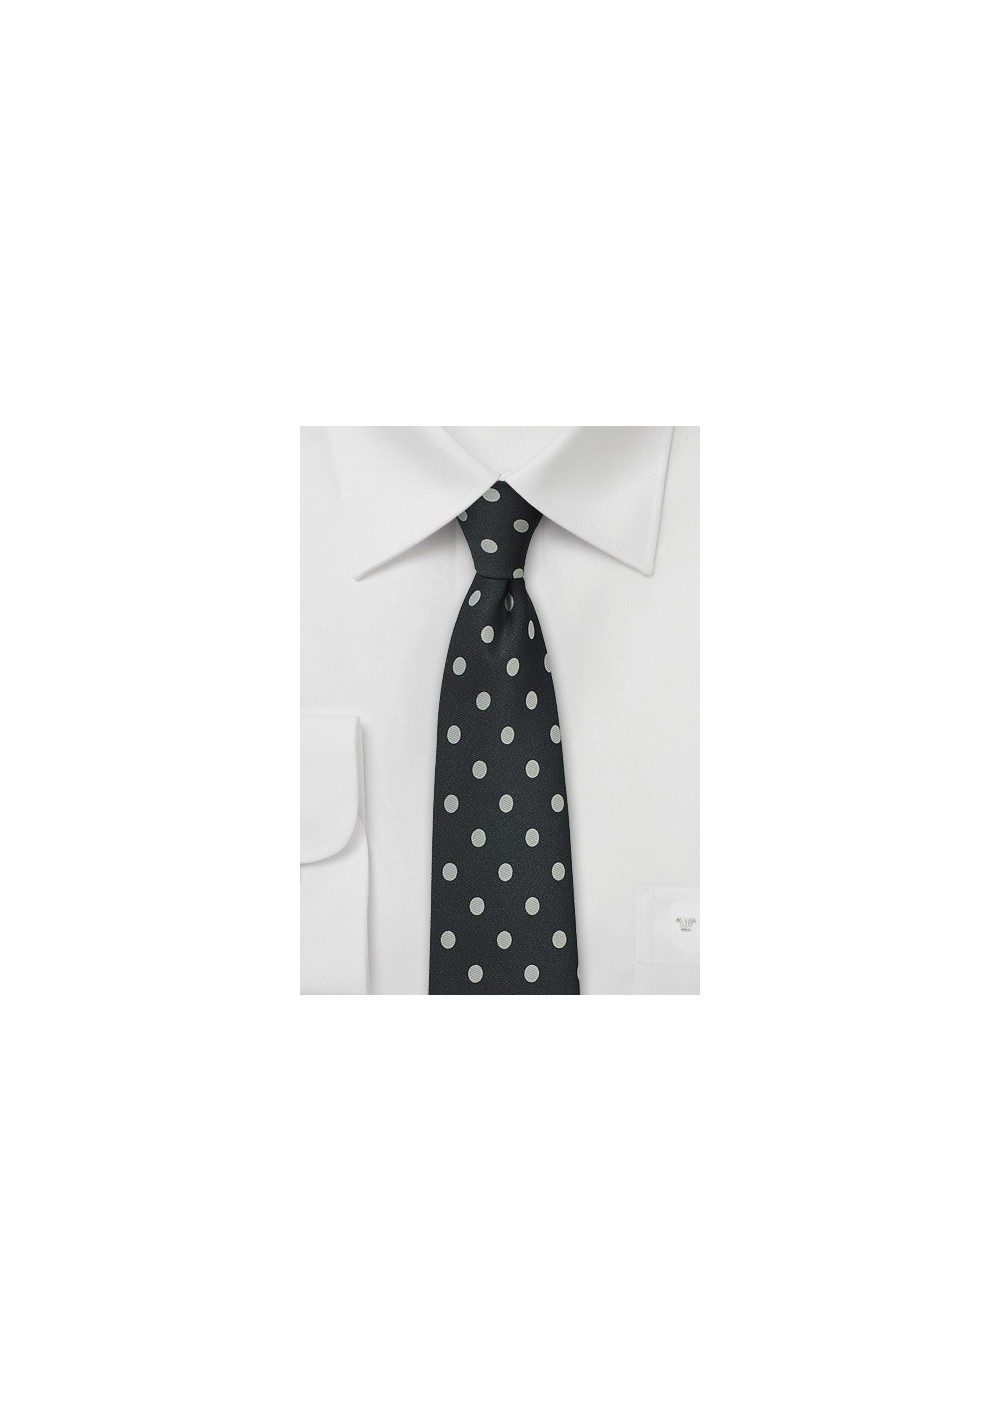 Elegant Black Tie with Silver Dots